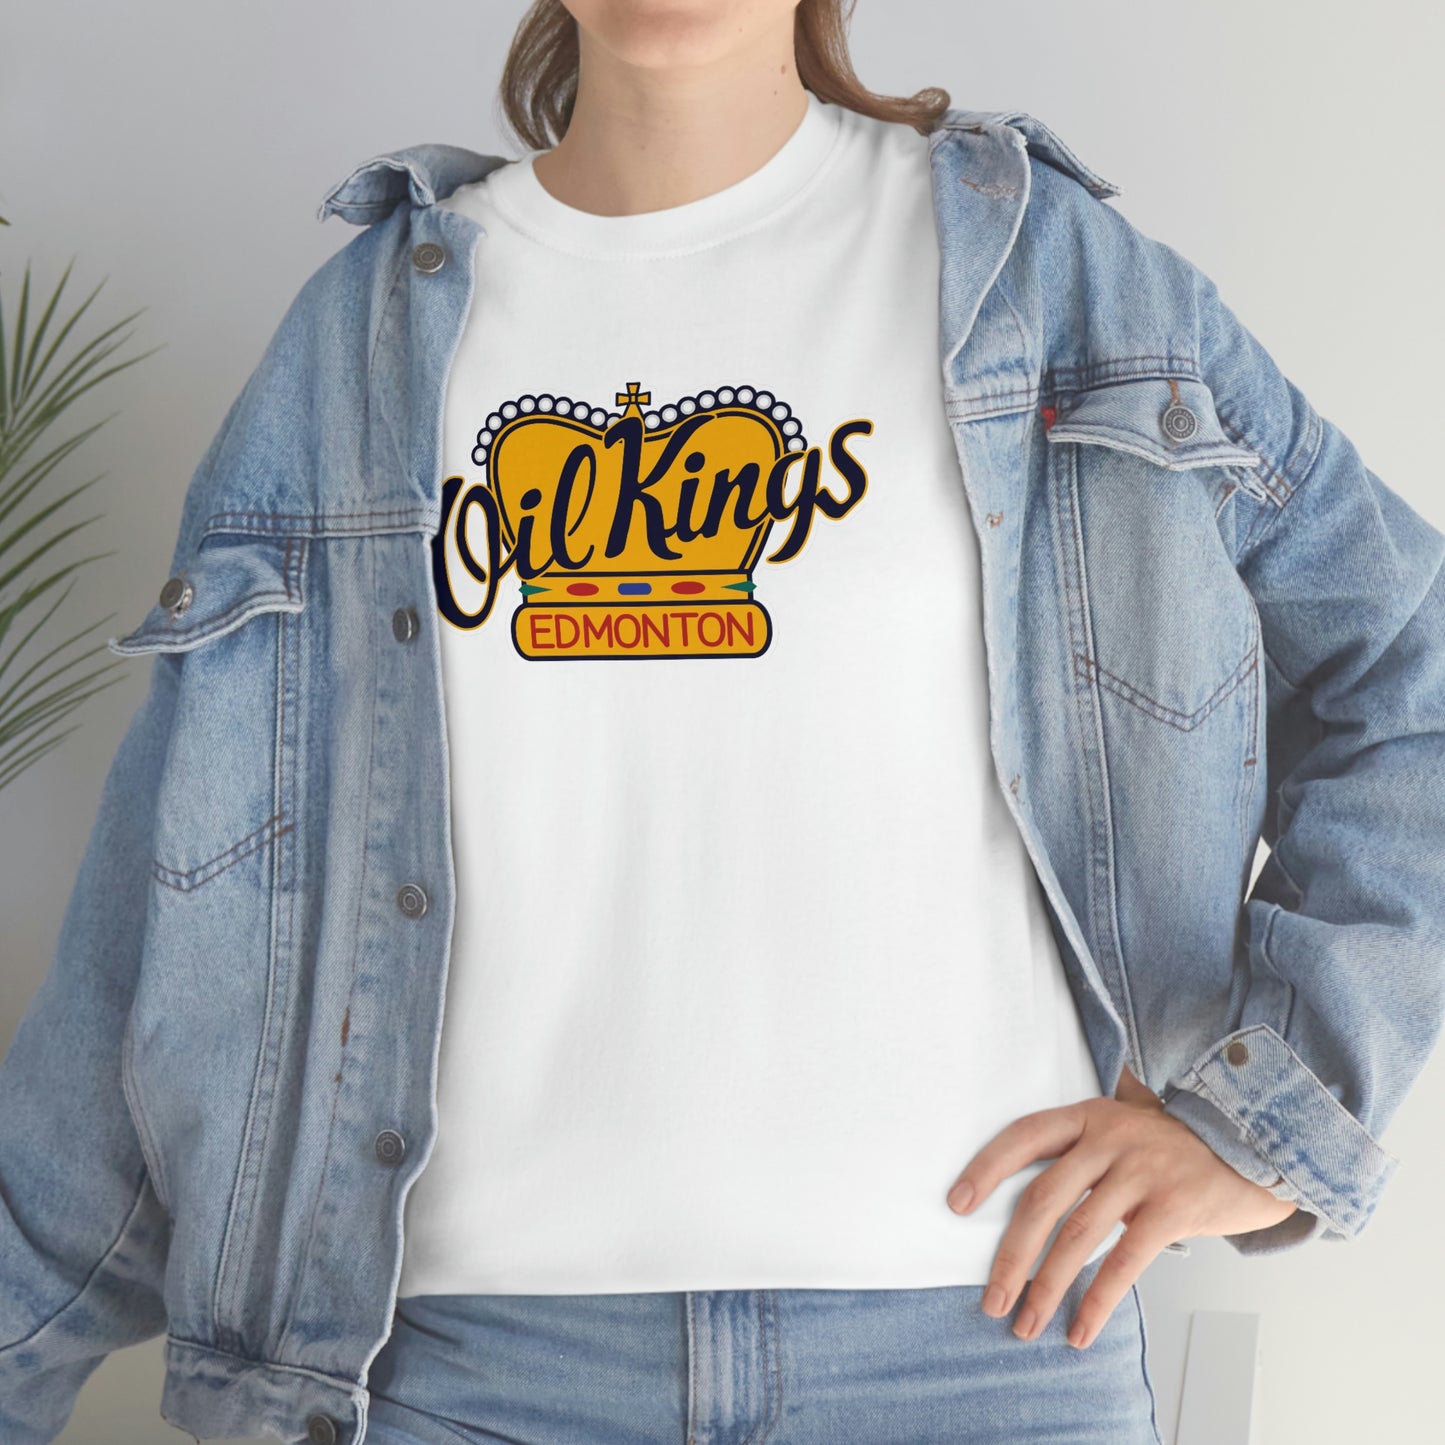 Edmonton Oil Kings T-Shirt